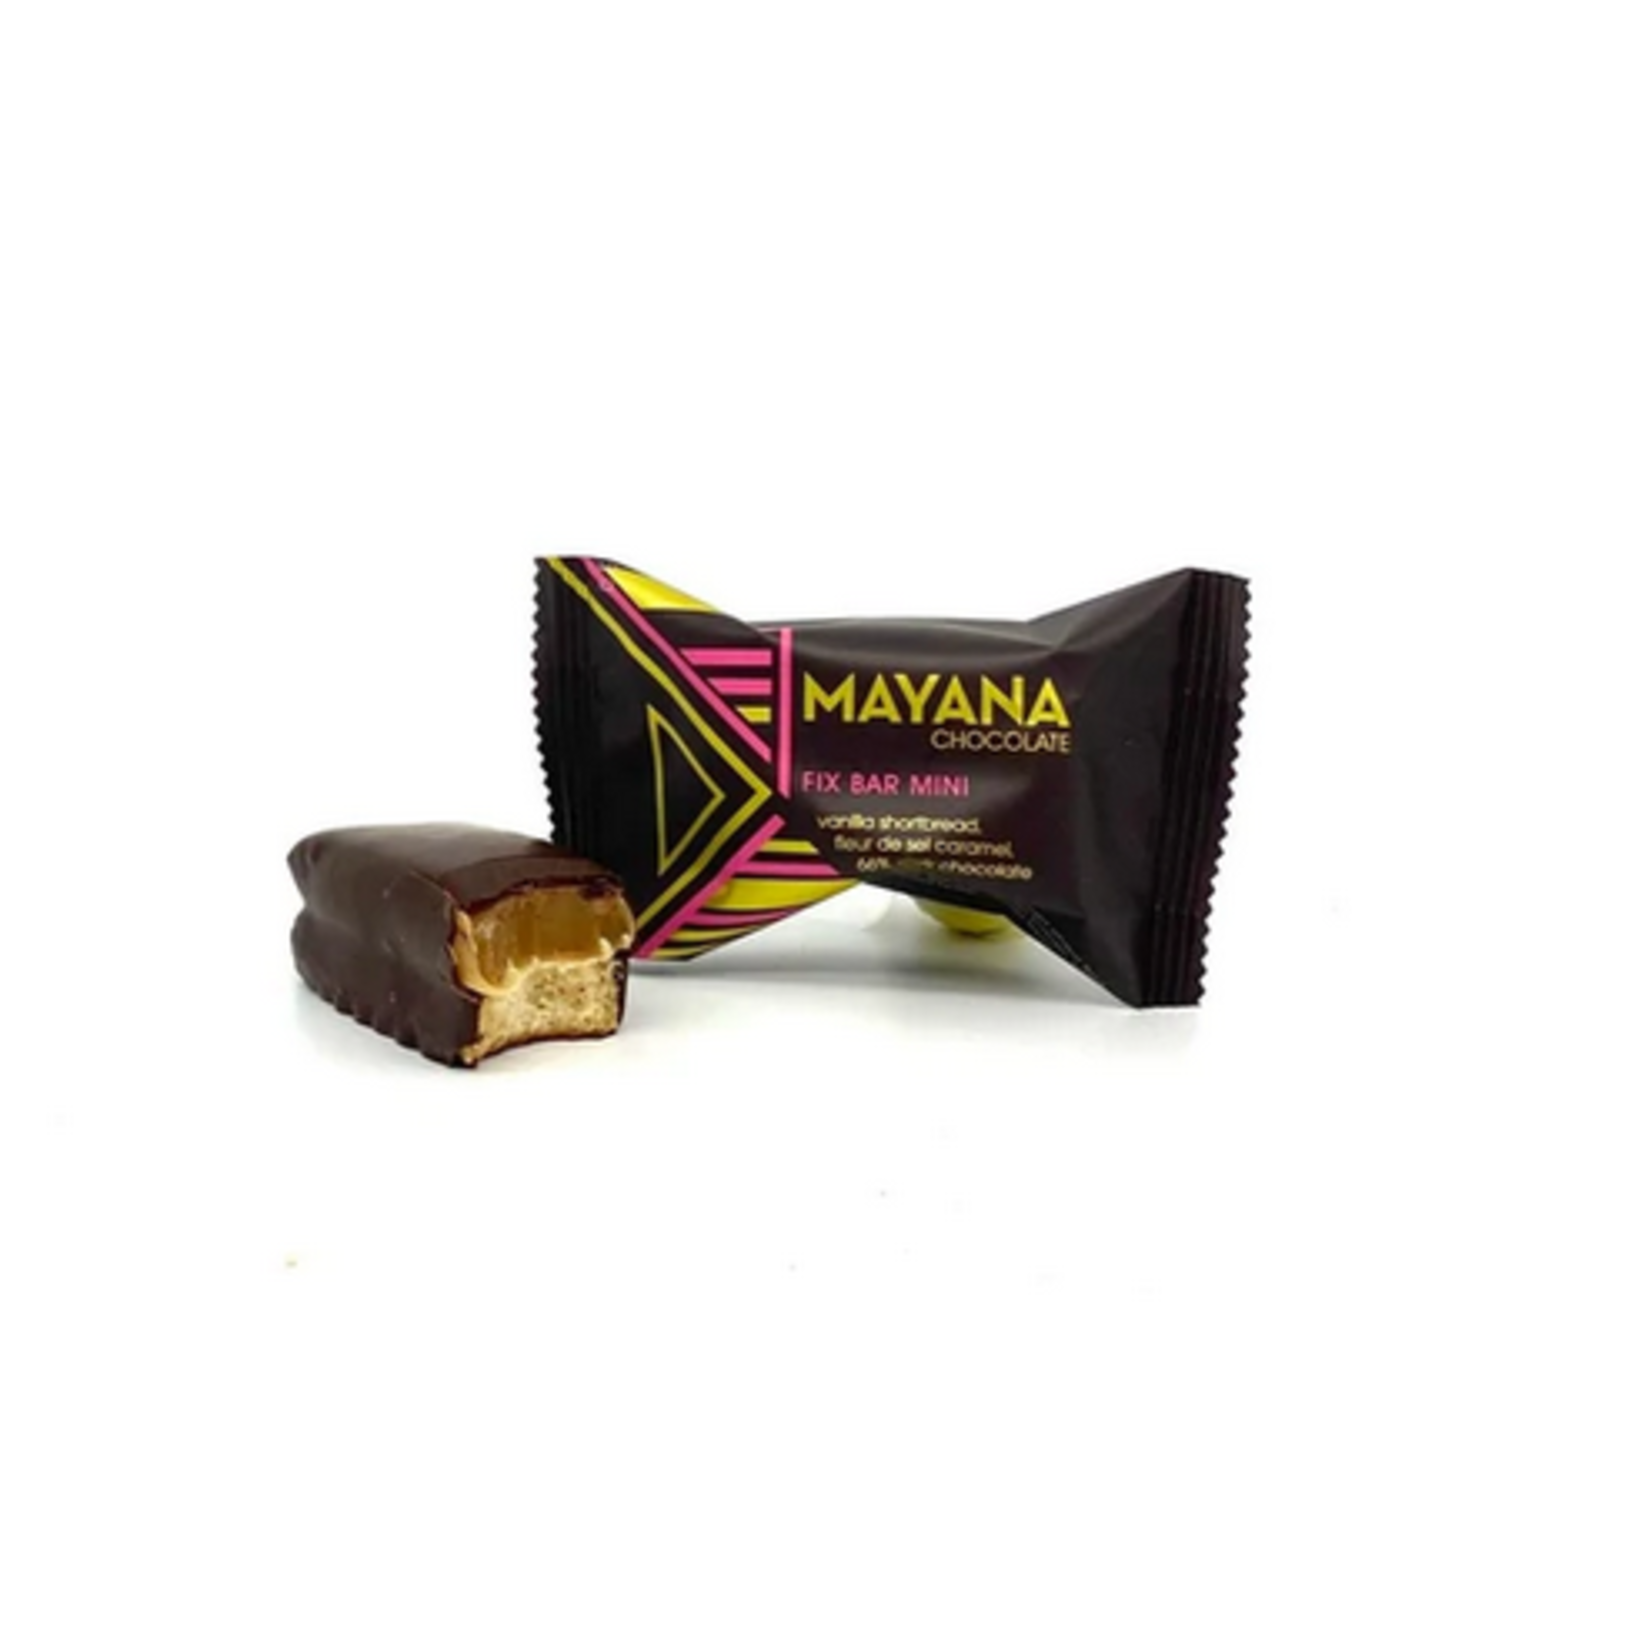 Mayana Chocolate The Fix Mini Bar 1.5oz